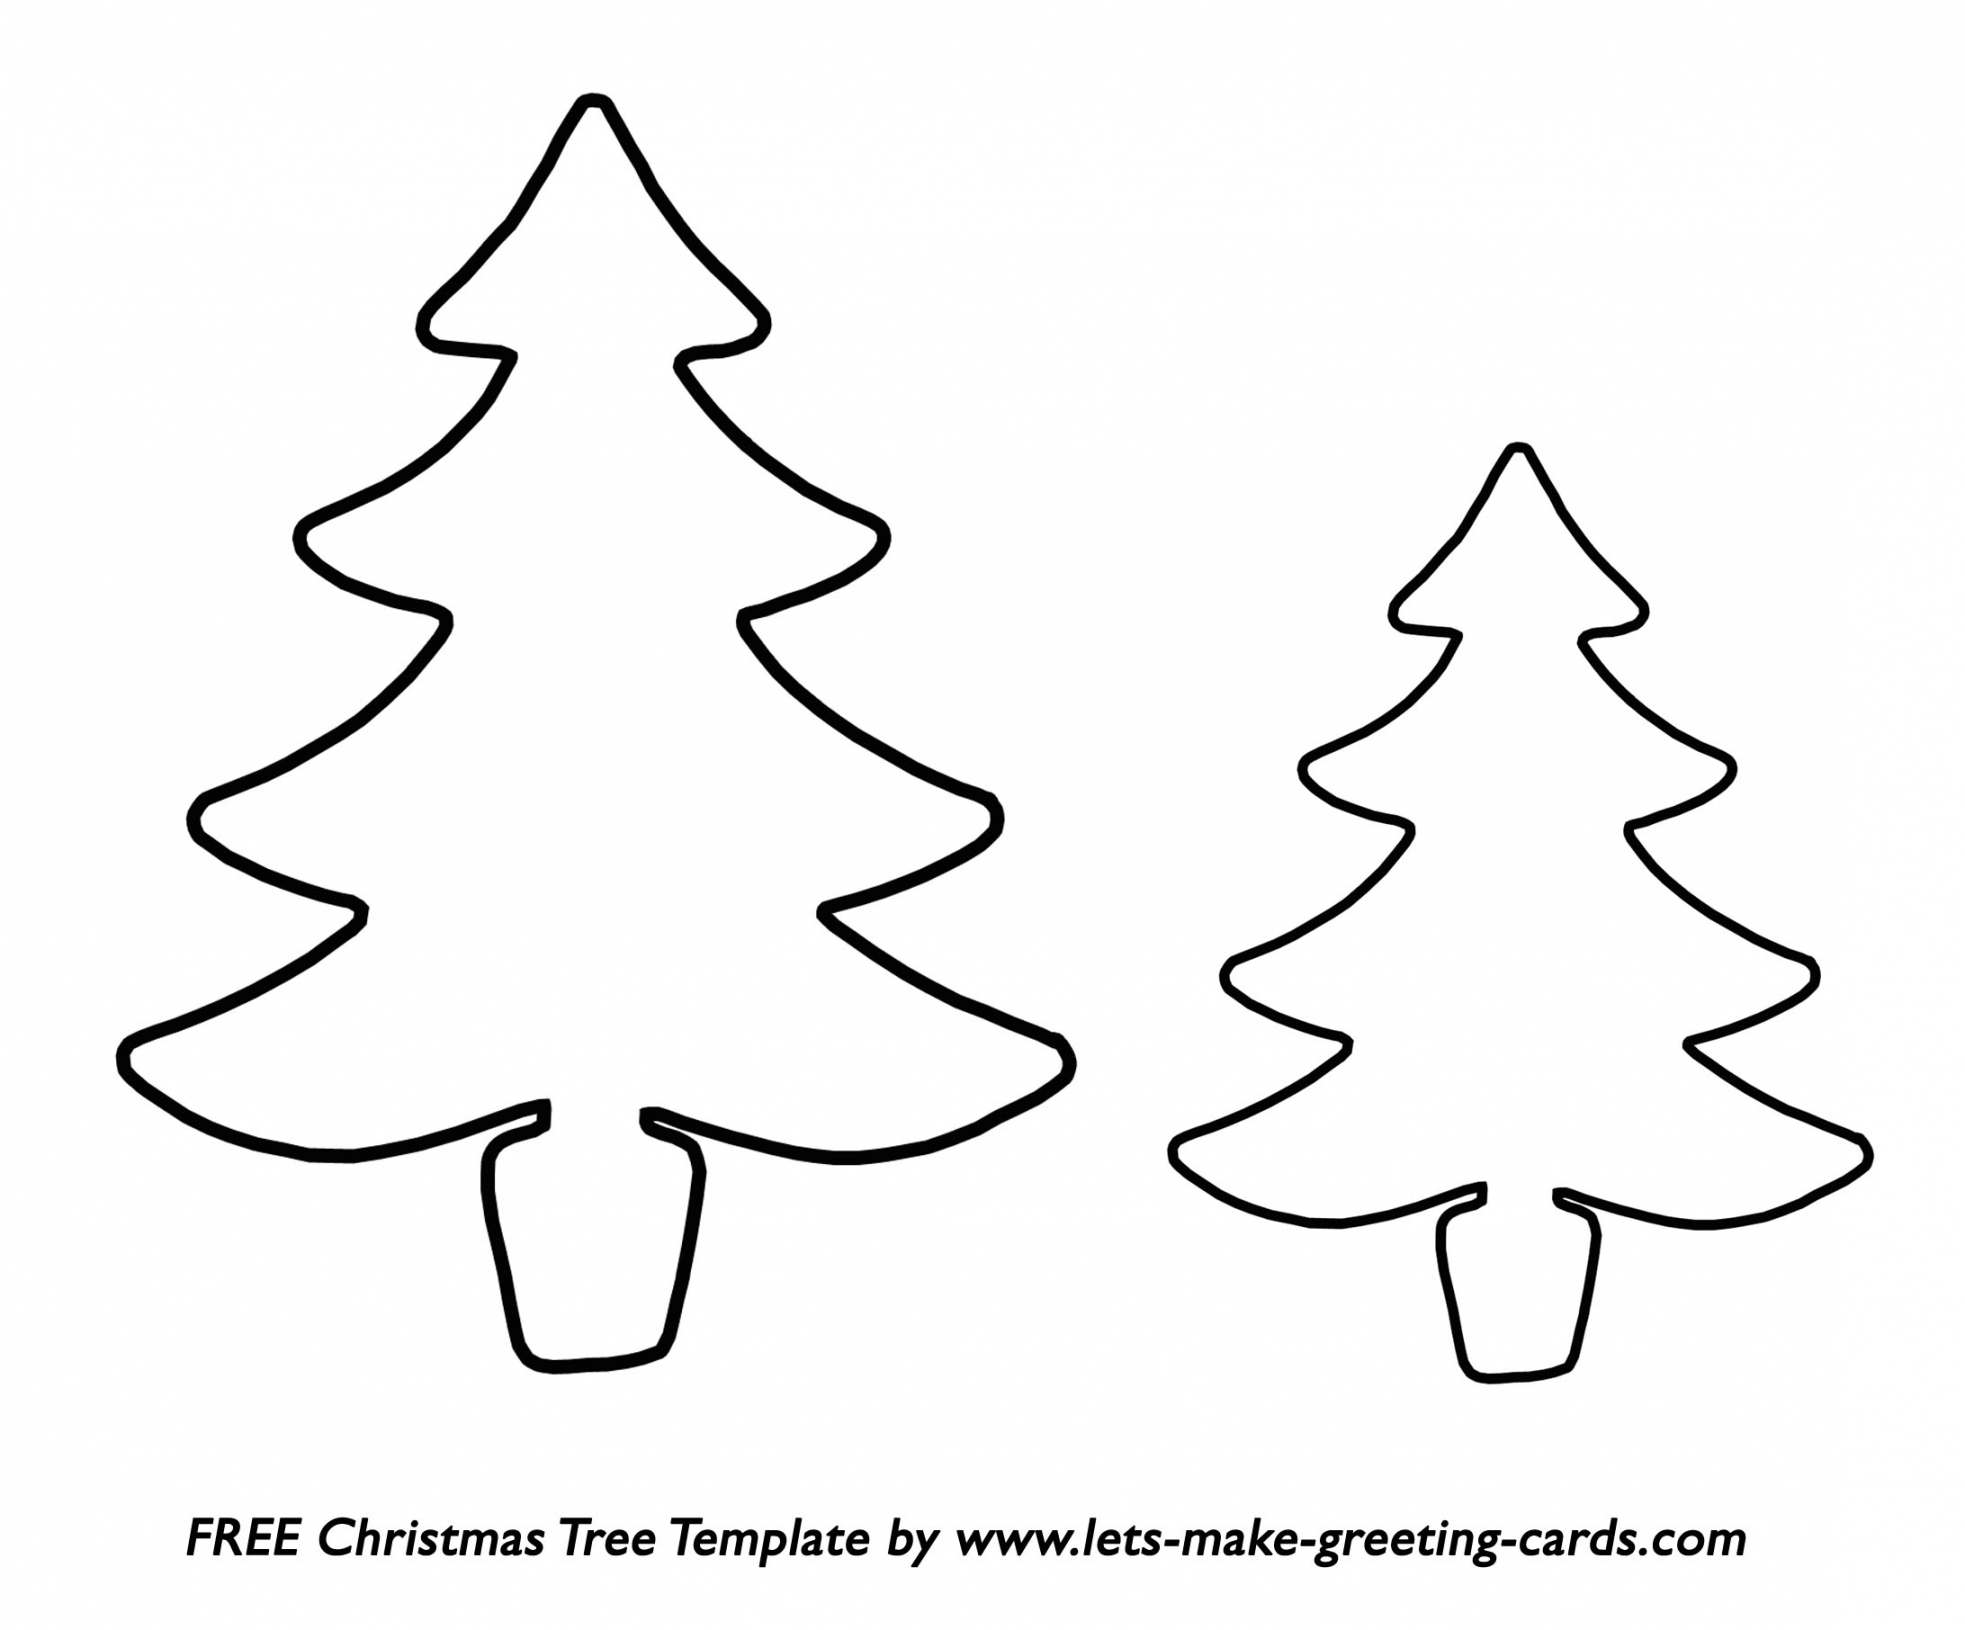 Free Christmas Tree Templates - FREE Printables - Christmas Tree Template Printable